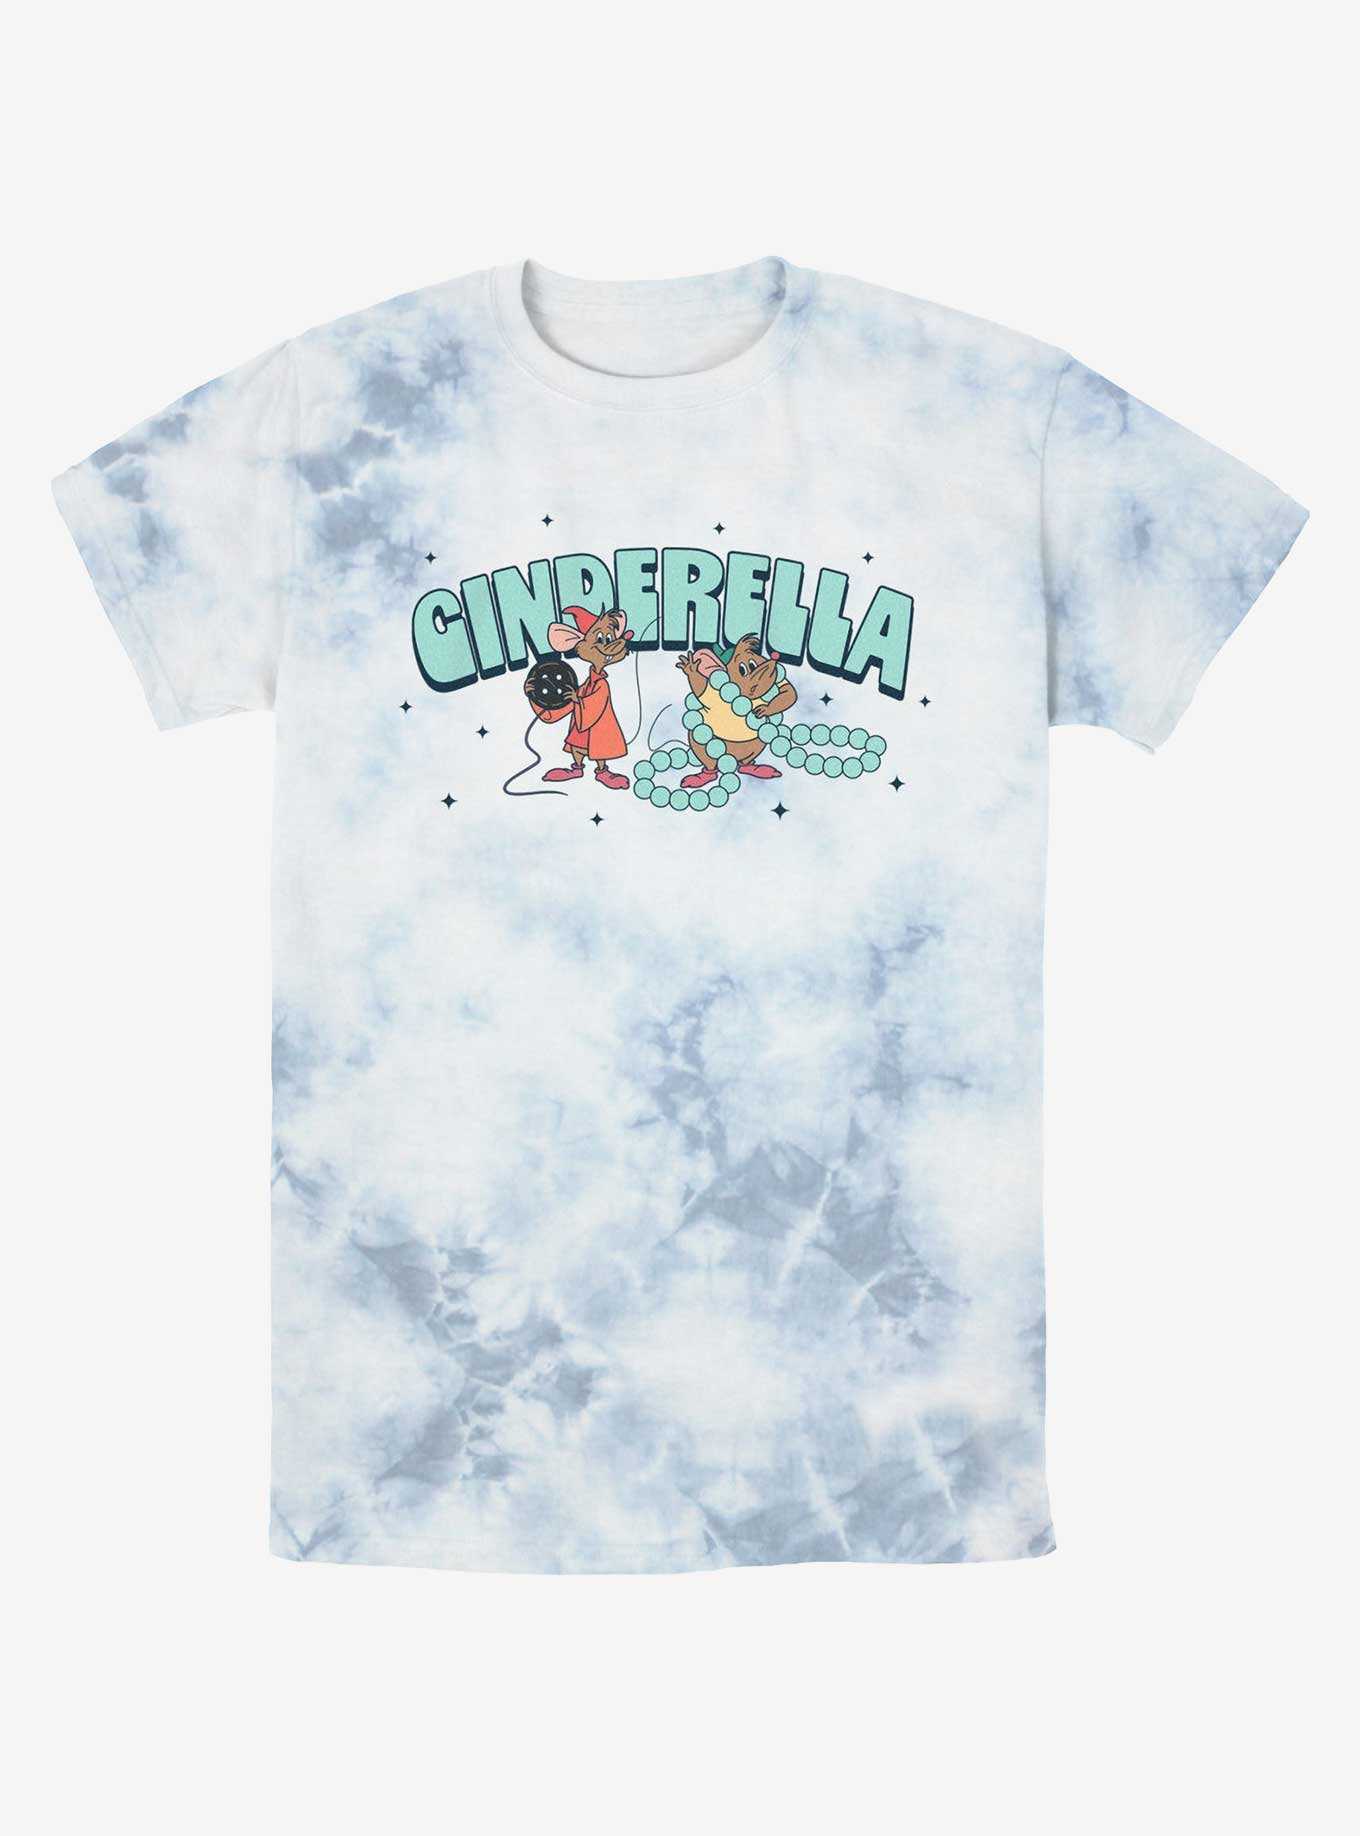 Disney Cinderella Jaq And Gus Tie-Dye T-Shirt, , hi-res